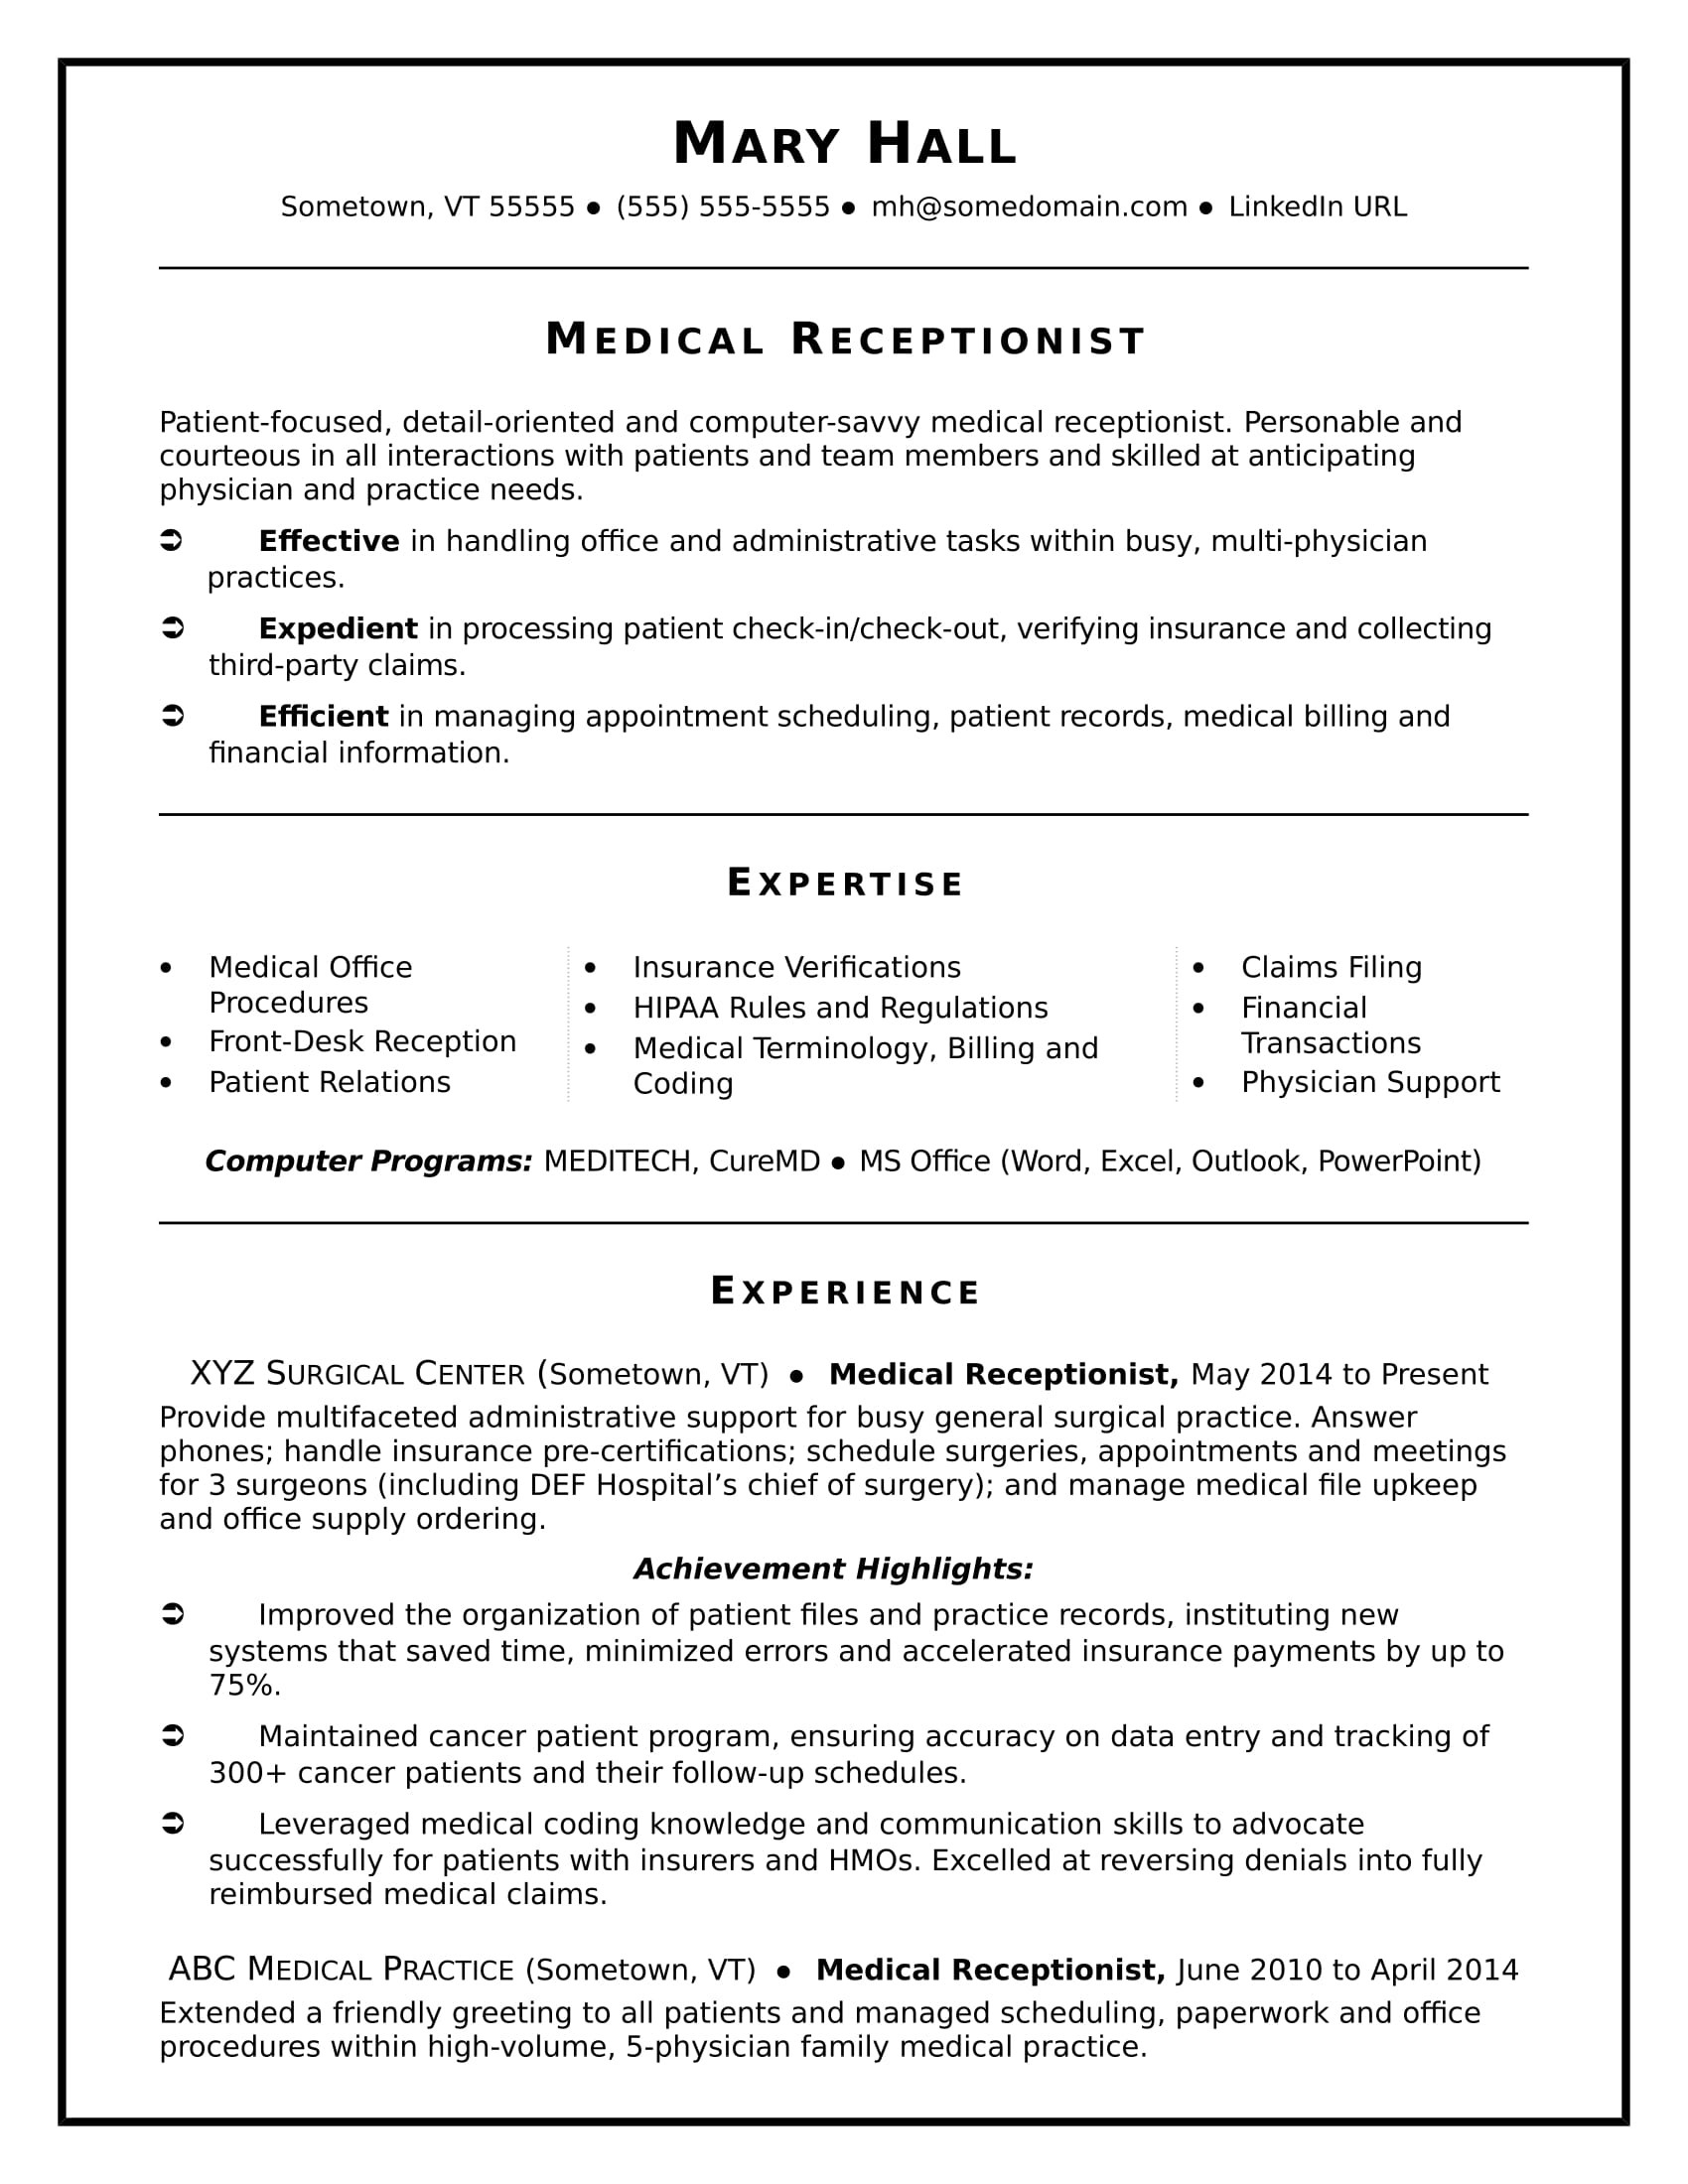 Free Resume Templates for Healthcare Administration Medical Receptionist Resume Sample Monster.com